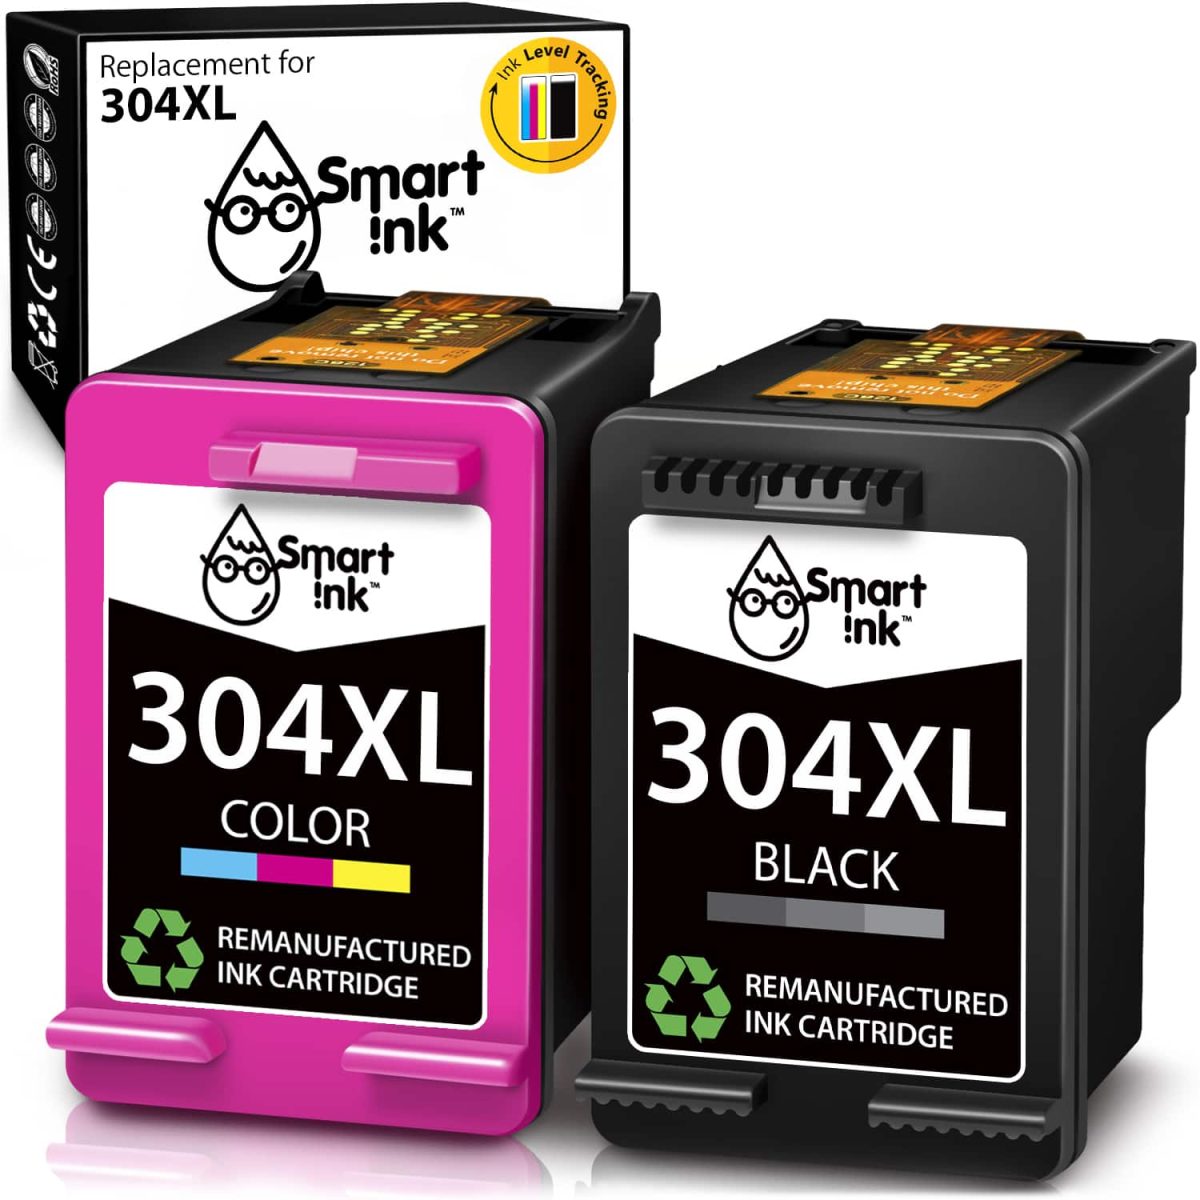 Hp Envy 5000 Ink Cartridges Buy Ink Refills For Hp Envy 5000 In The United Kingdom 1703